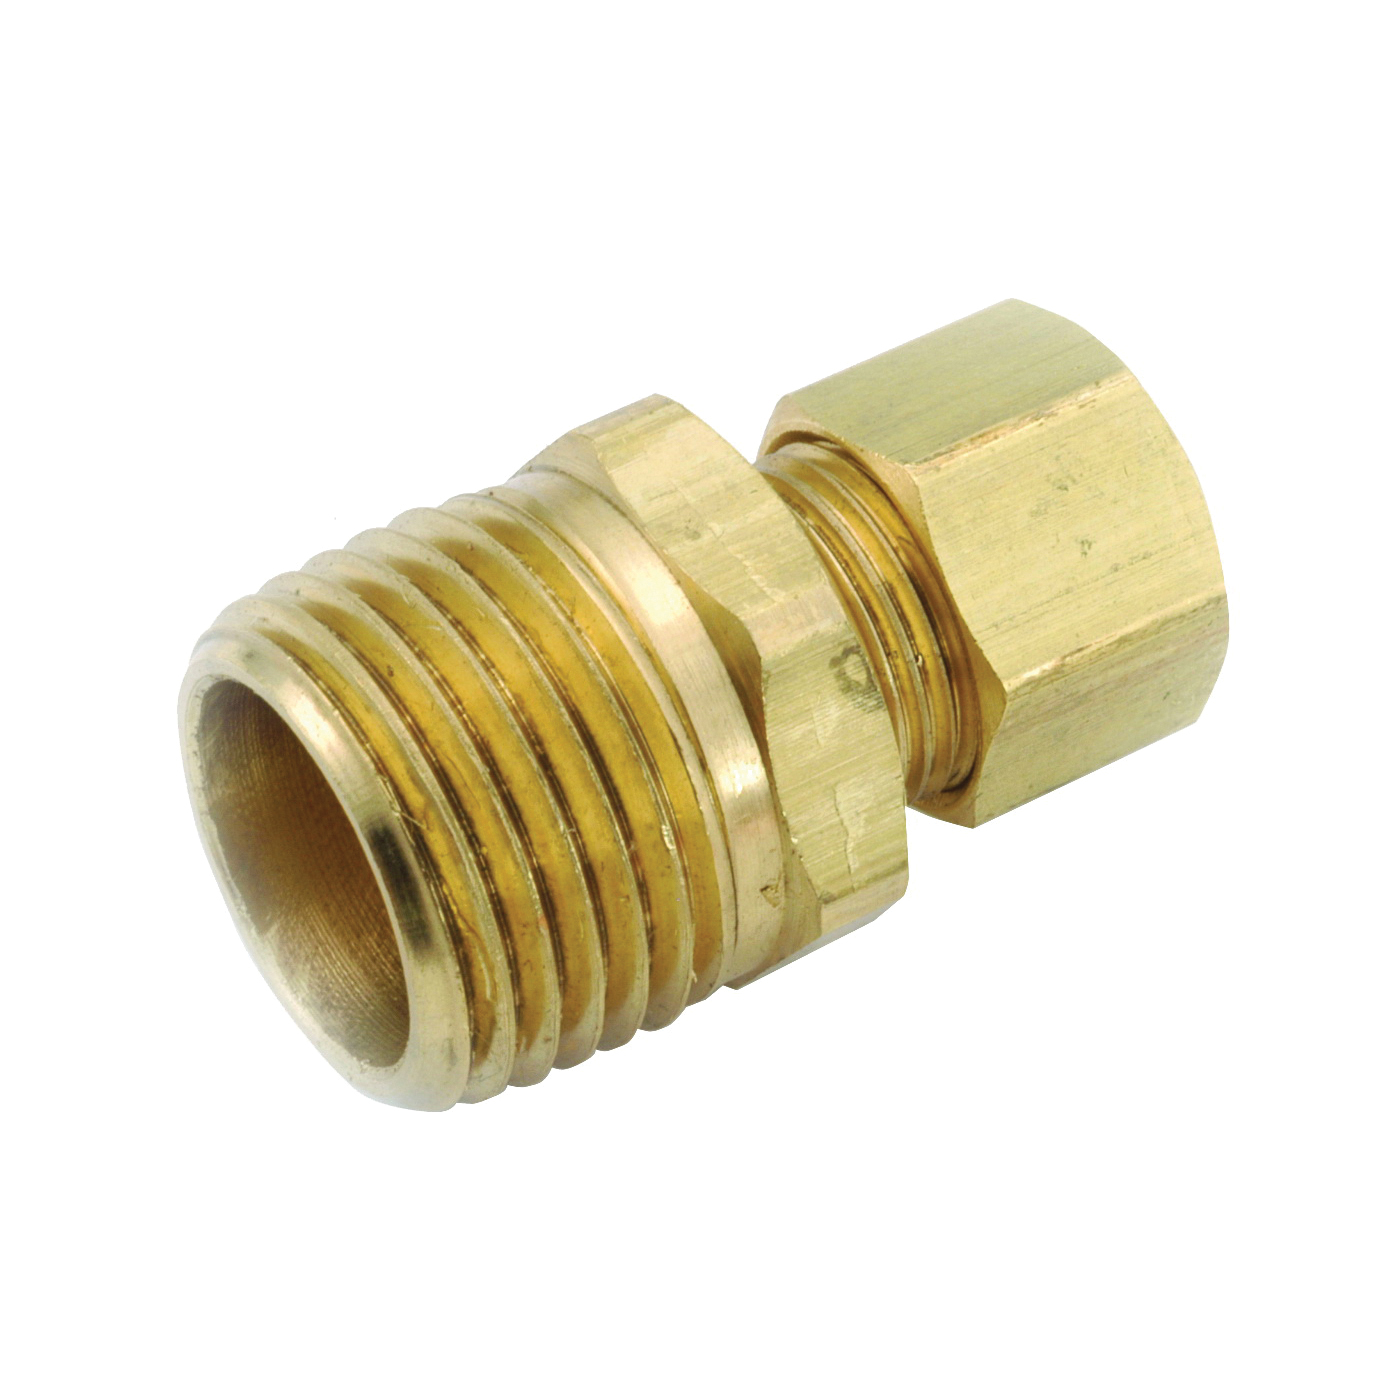 Anderson Metals 750068-0302 Pipe Connector, 3/16 x 1/8 in, Compression x Male, Brass, 400 psi Pressure - 1